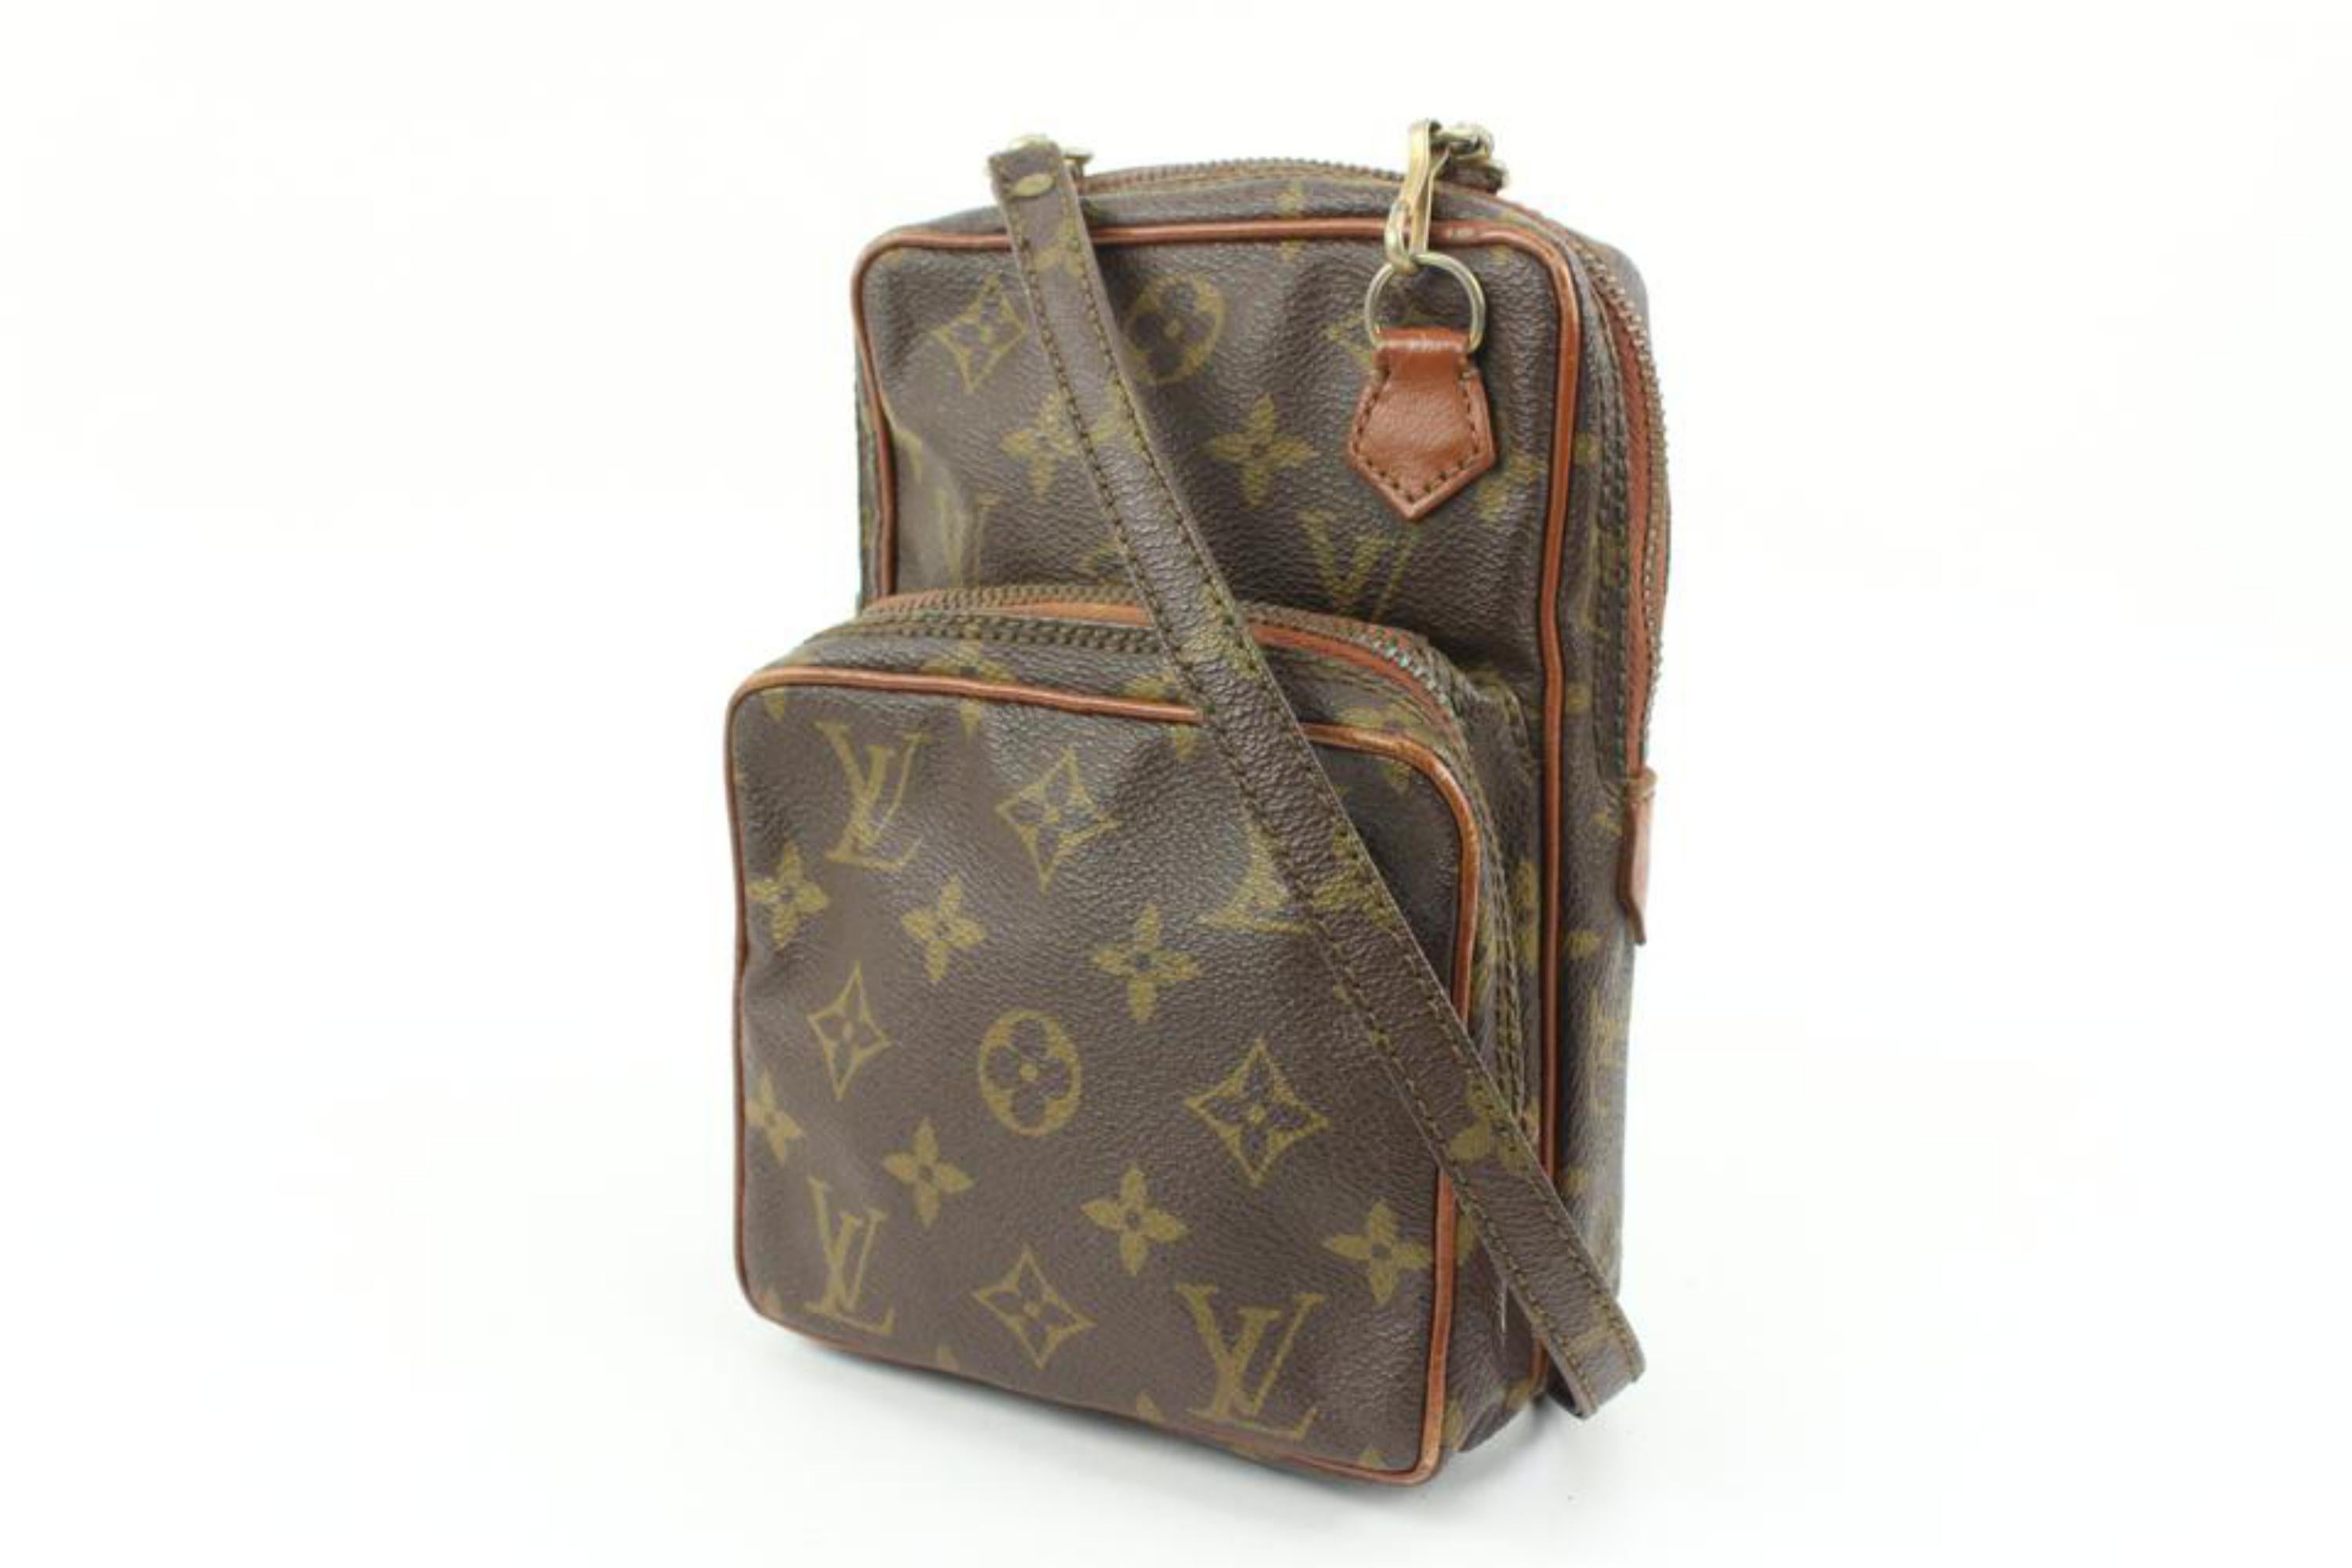 Louis Vuitton Monogram Mini Amazon Crossbody Bag 119lv48
Date Code/Serial Number: 821
Made In: France
Measurements: Length:  5.5